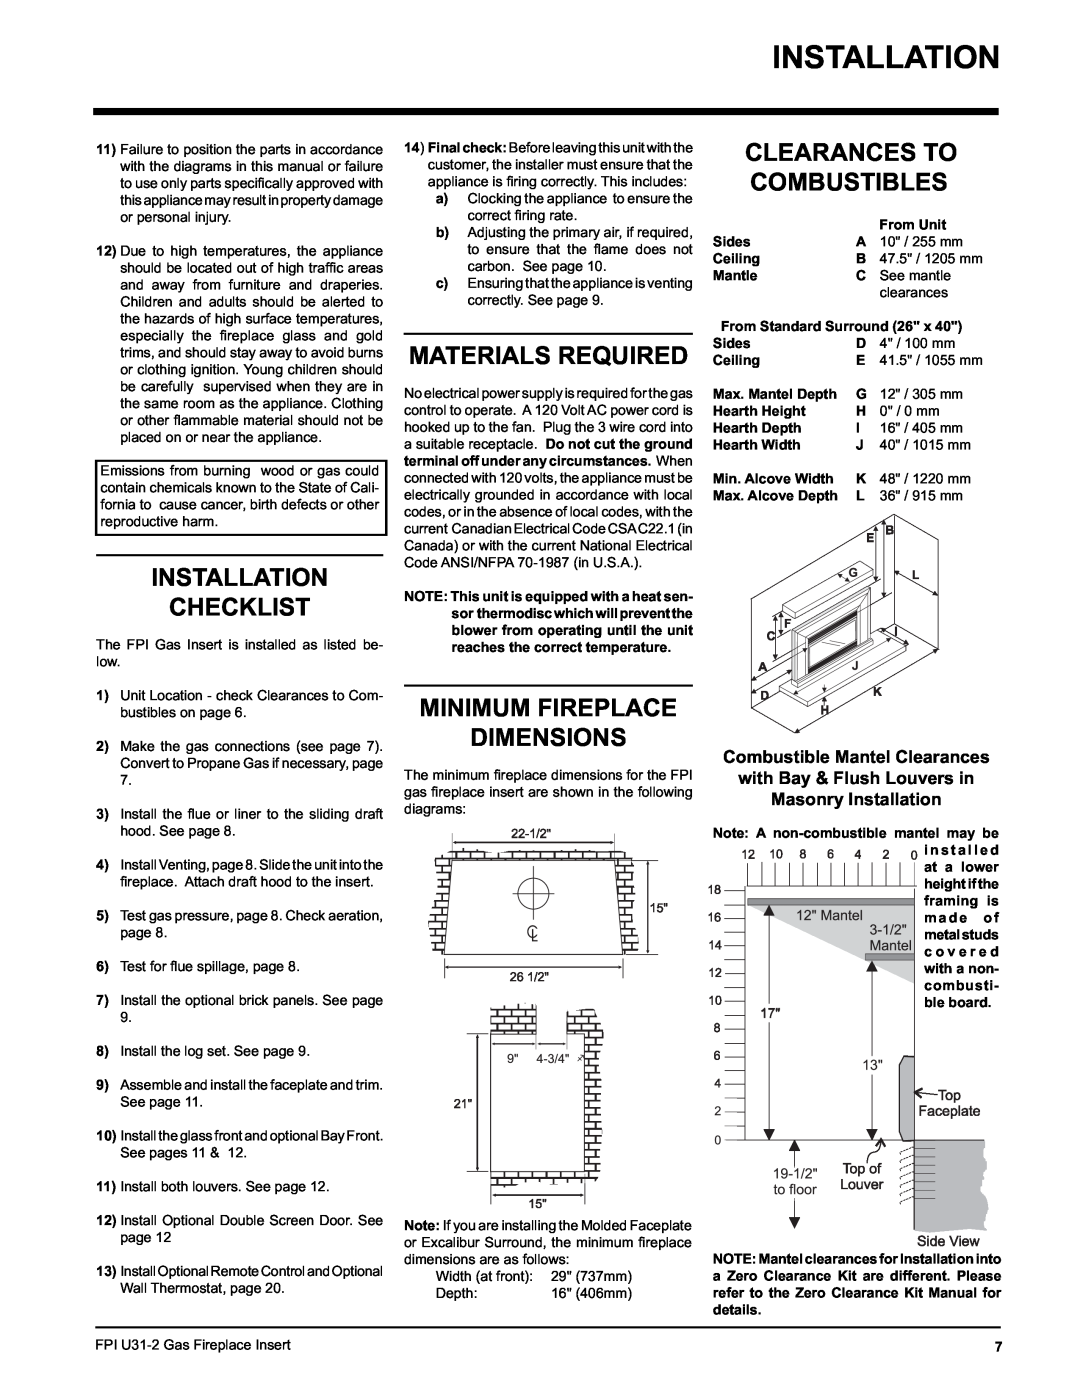 Recoton/Advent U31-LP2, U31-NG2 Installation Checklist, Materials Required, Minimum Fireplace Dimensions 